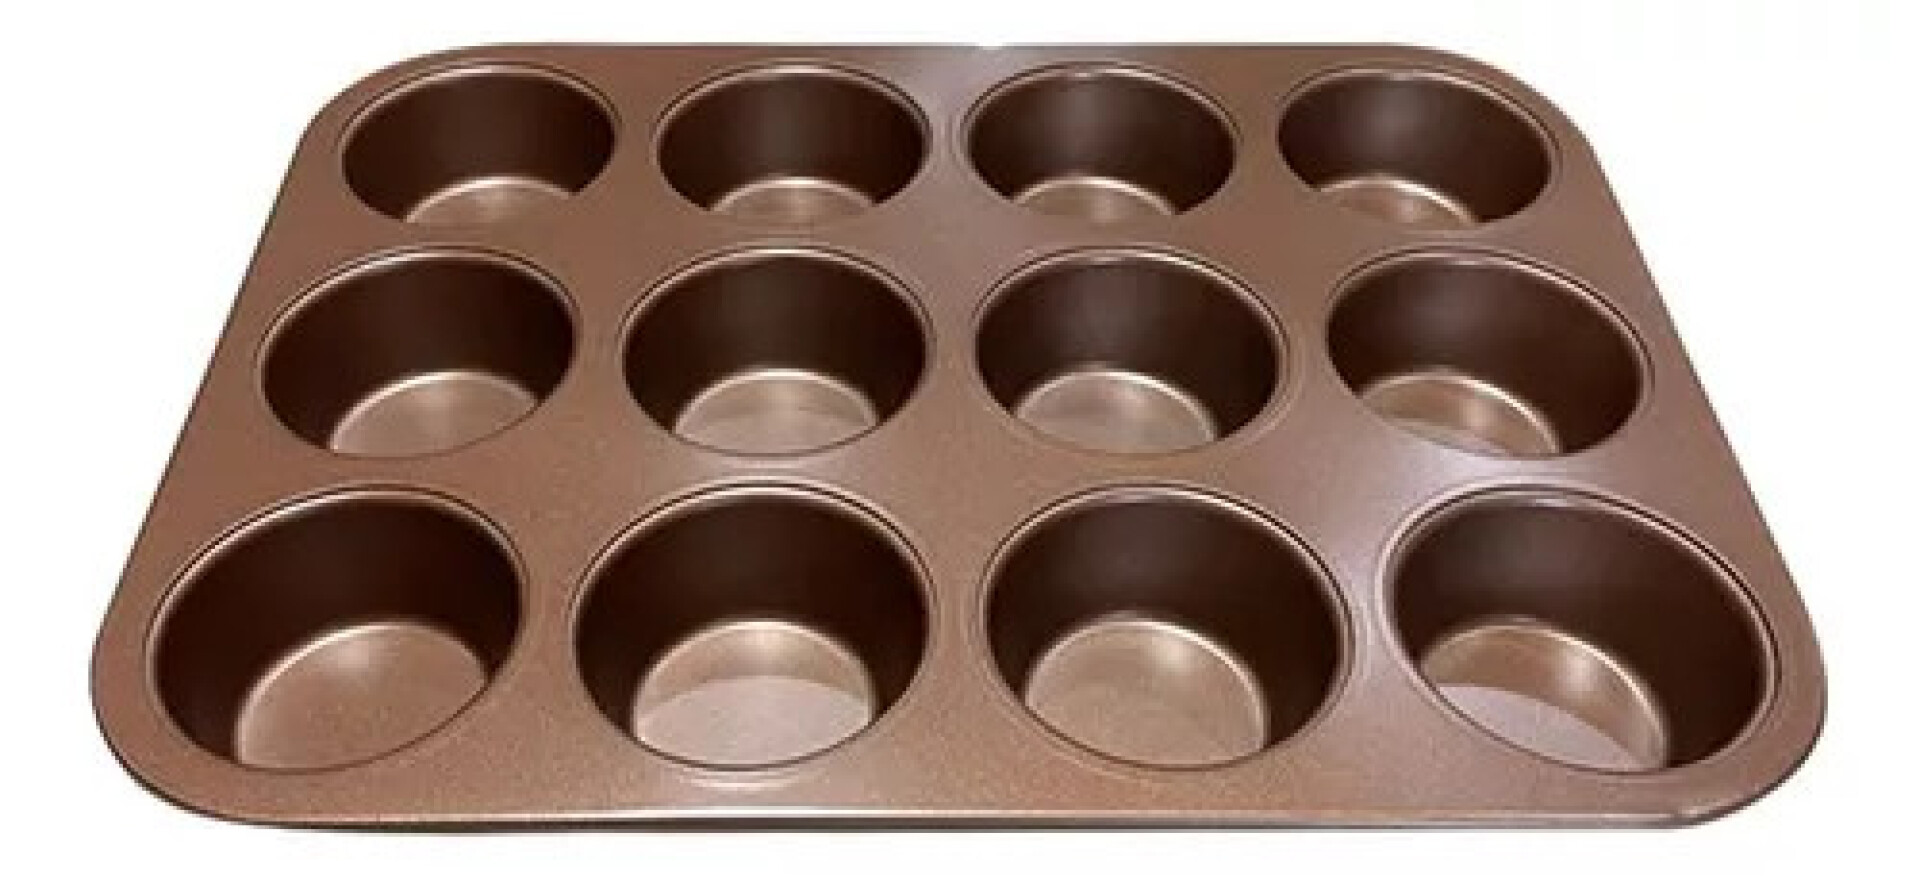 Molde Para Muffins 6 Divisiones. Antiadherente. Color Cereza. Bakeware